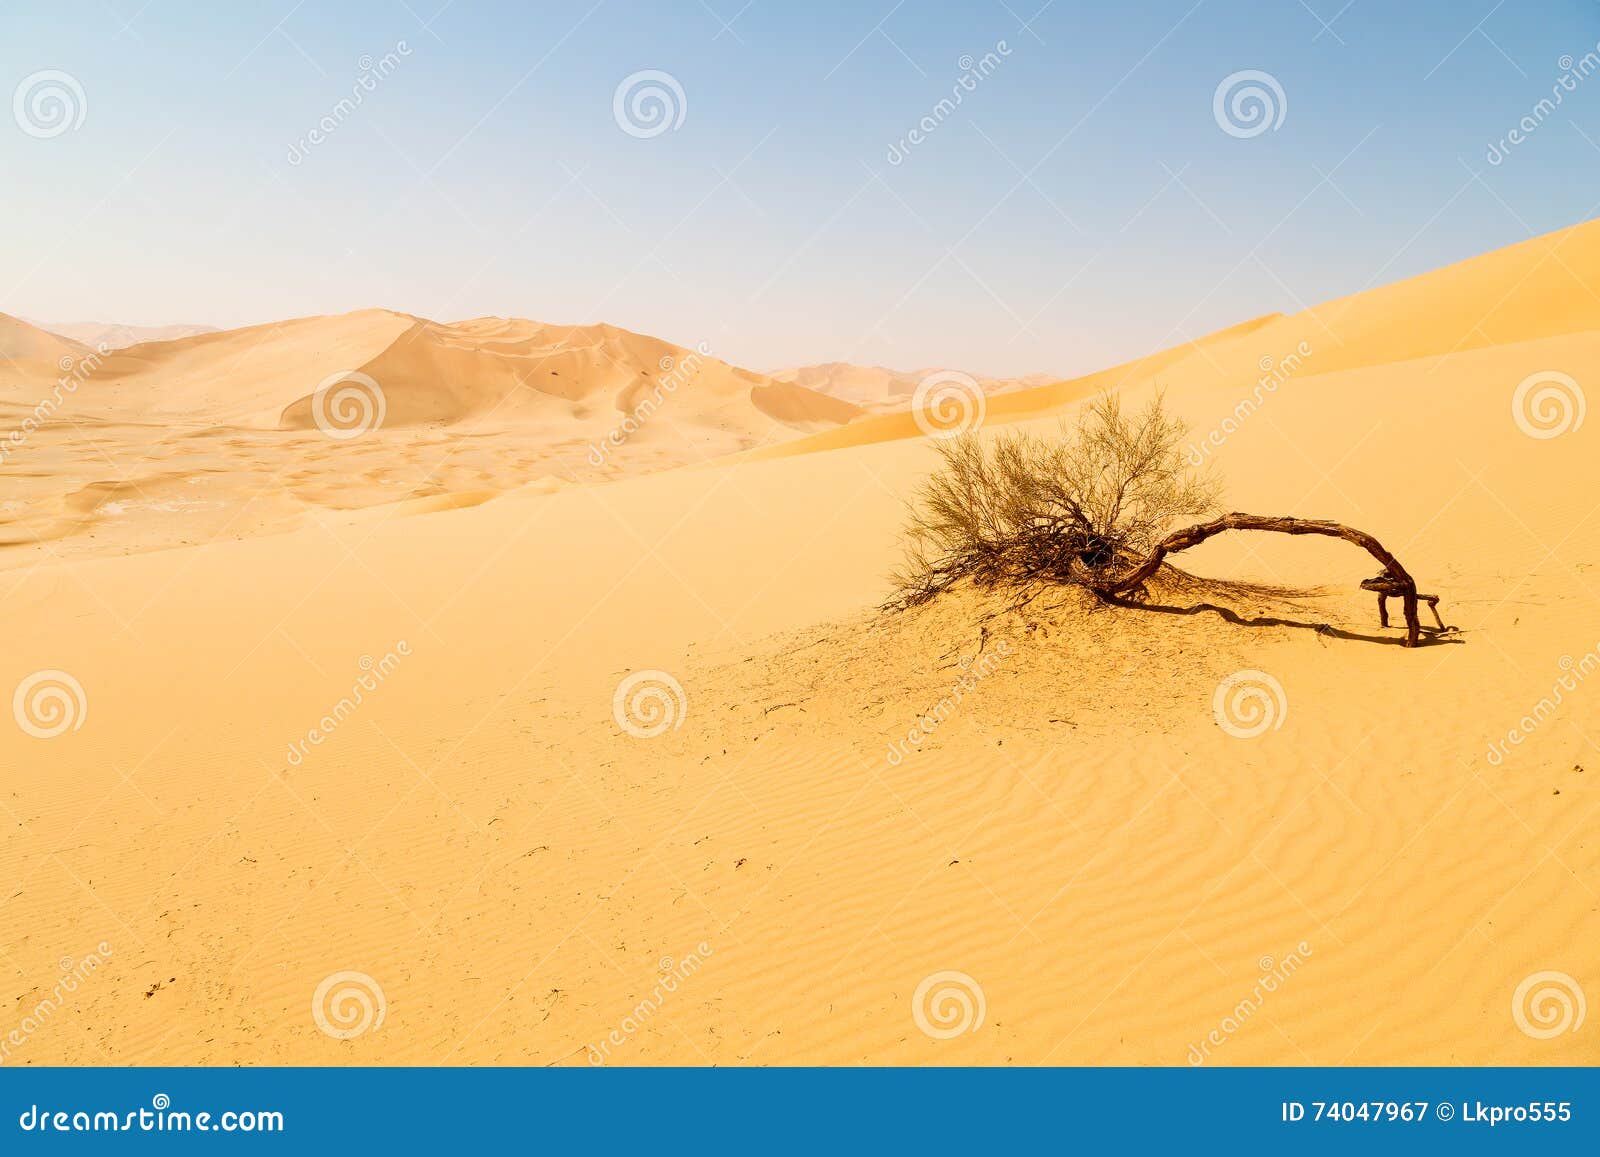 in oman old desert rub al khali the empty quarter and outdoor